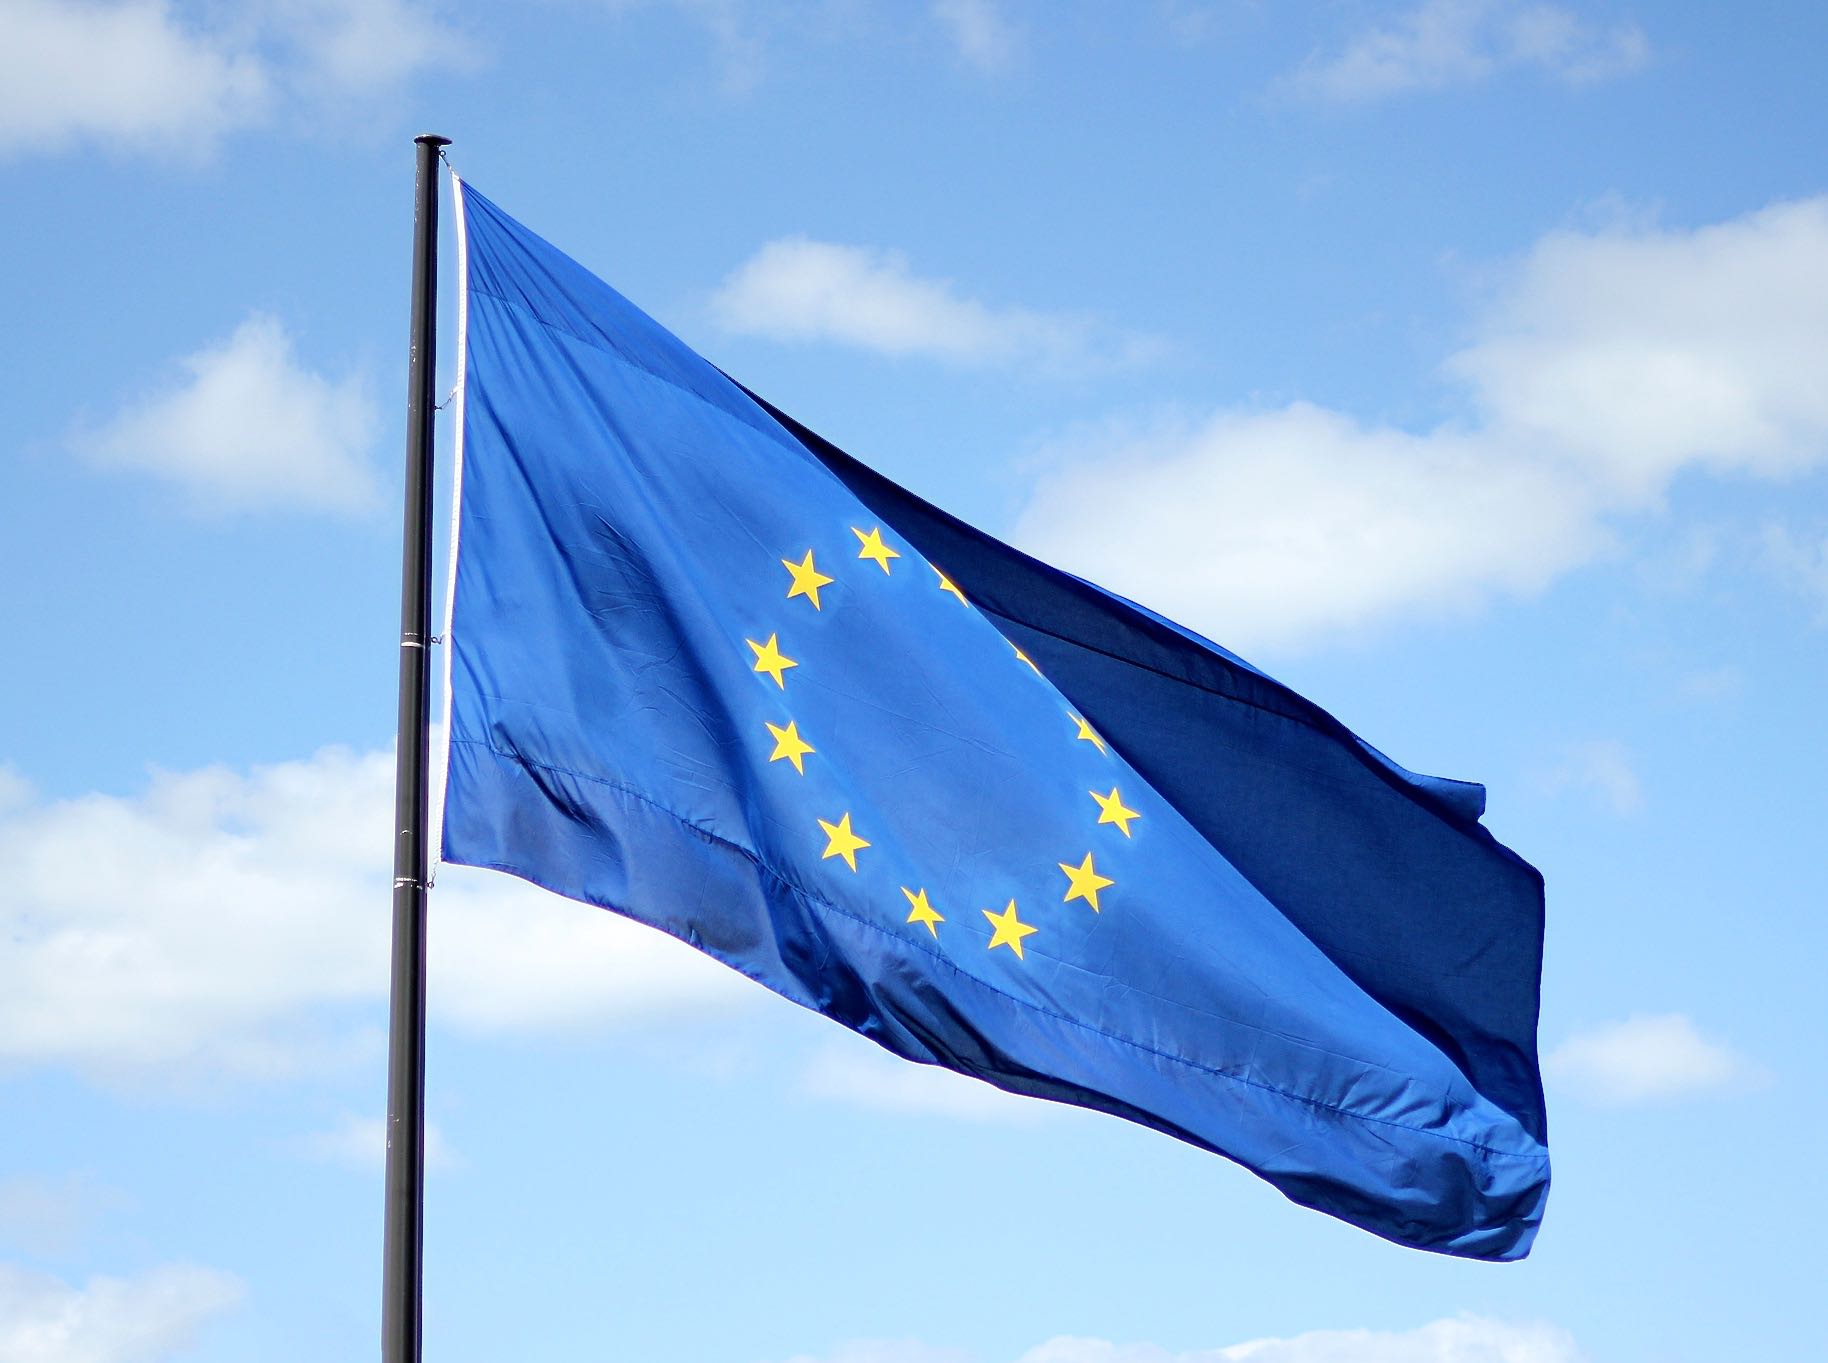 ©Justus Blümeer. The flag of the European Union (EU)